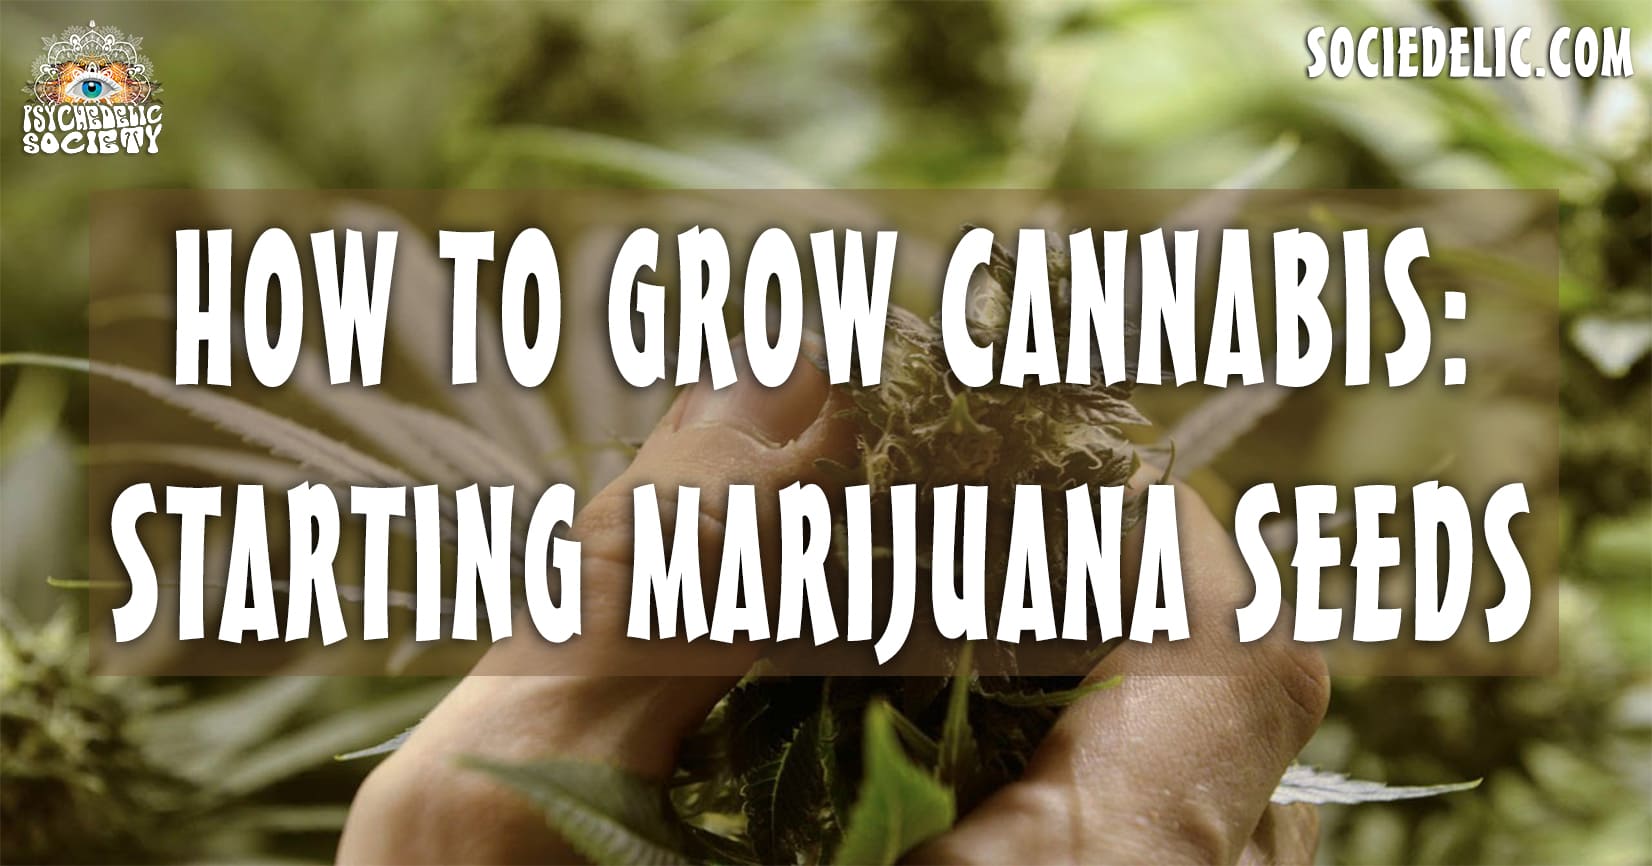 How To Grow Cannabis: Starting Marijuana Seeds - Sociedelic